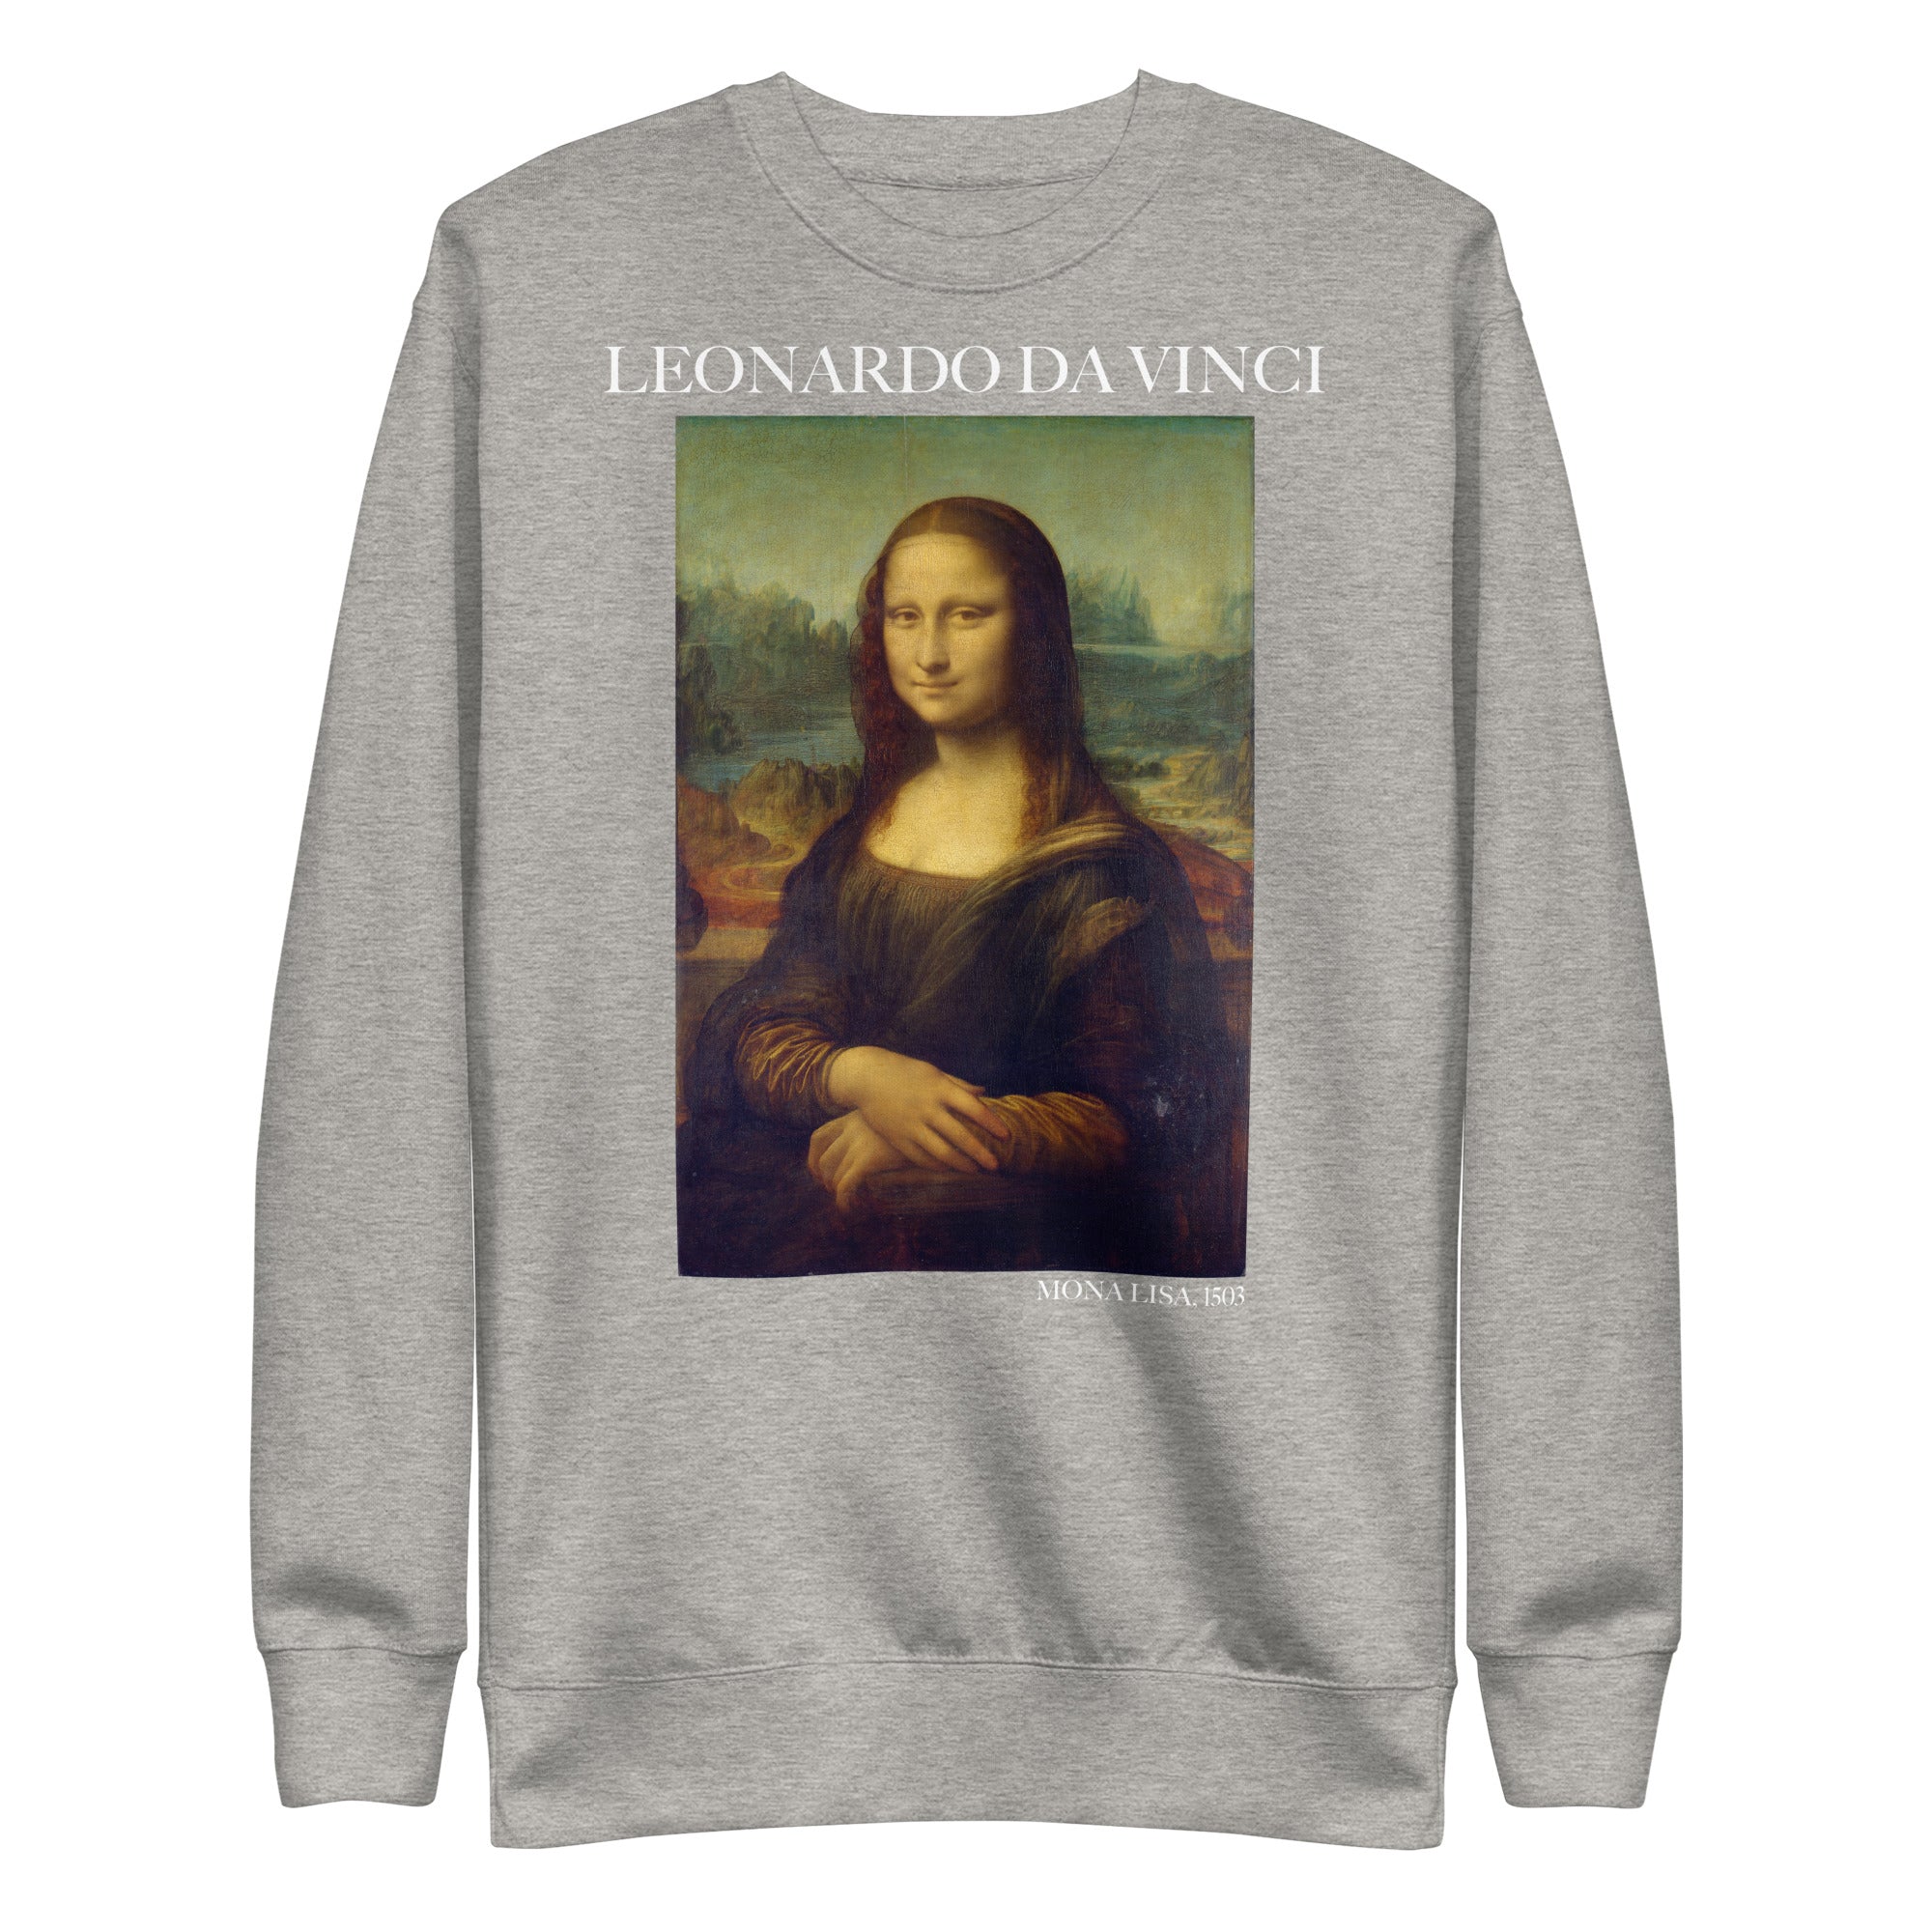 Leonardo da Vinci 'Mona Lisa' Famous Painting Sweatshirt | Unisex Premium Sweatshirt